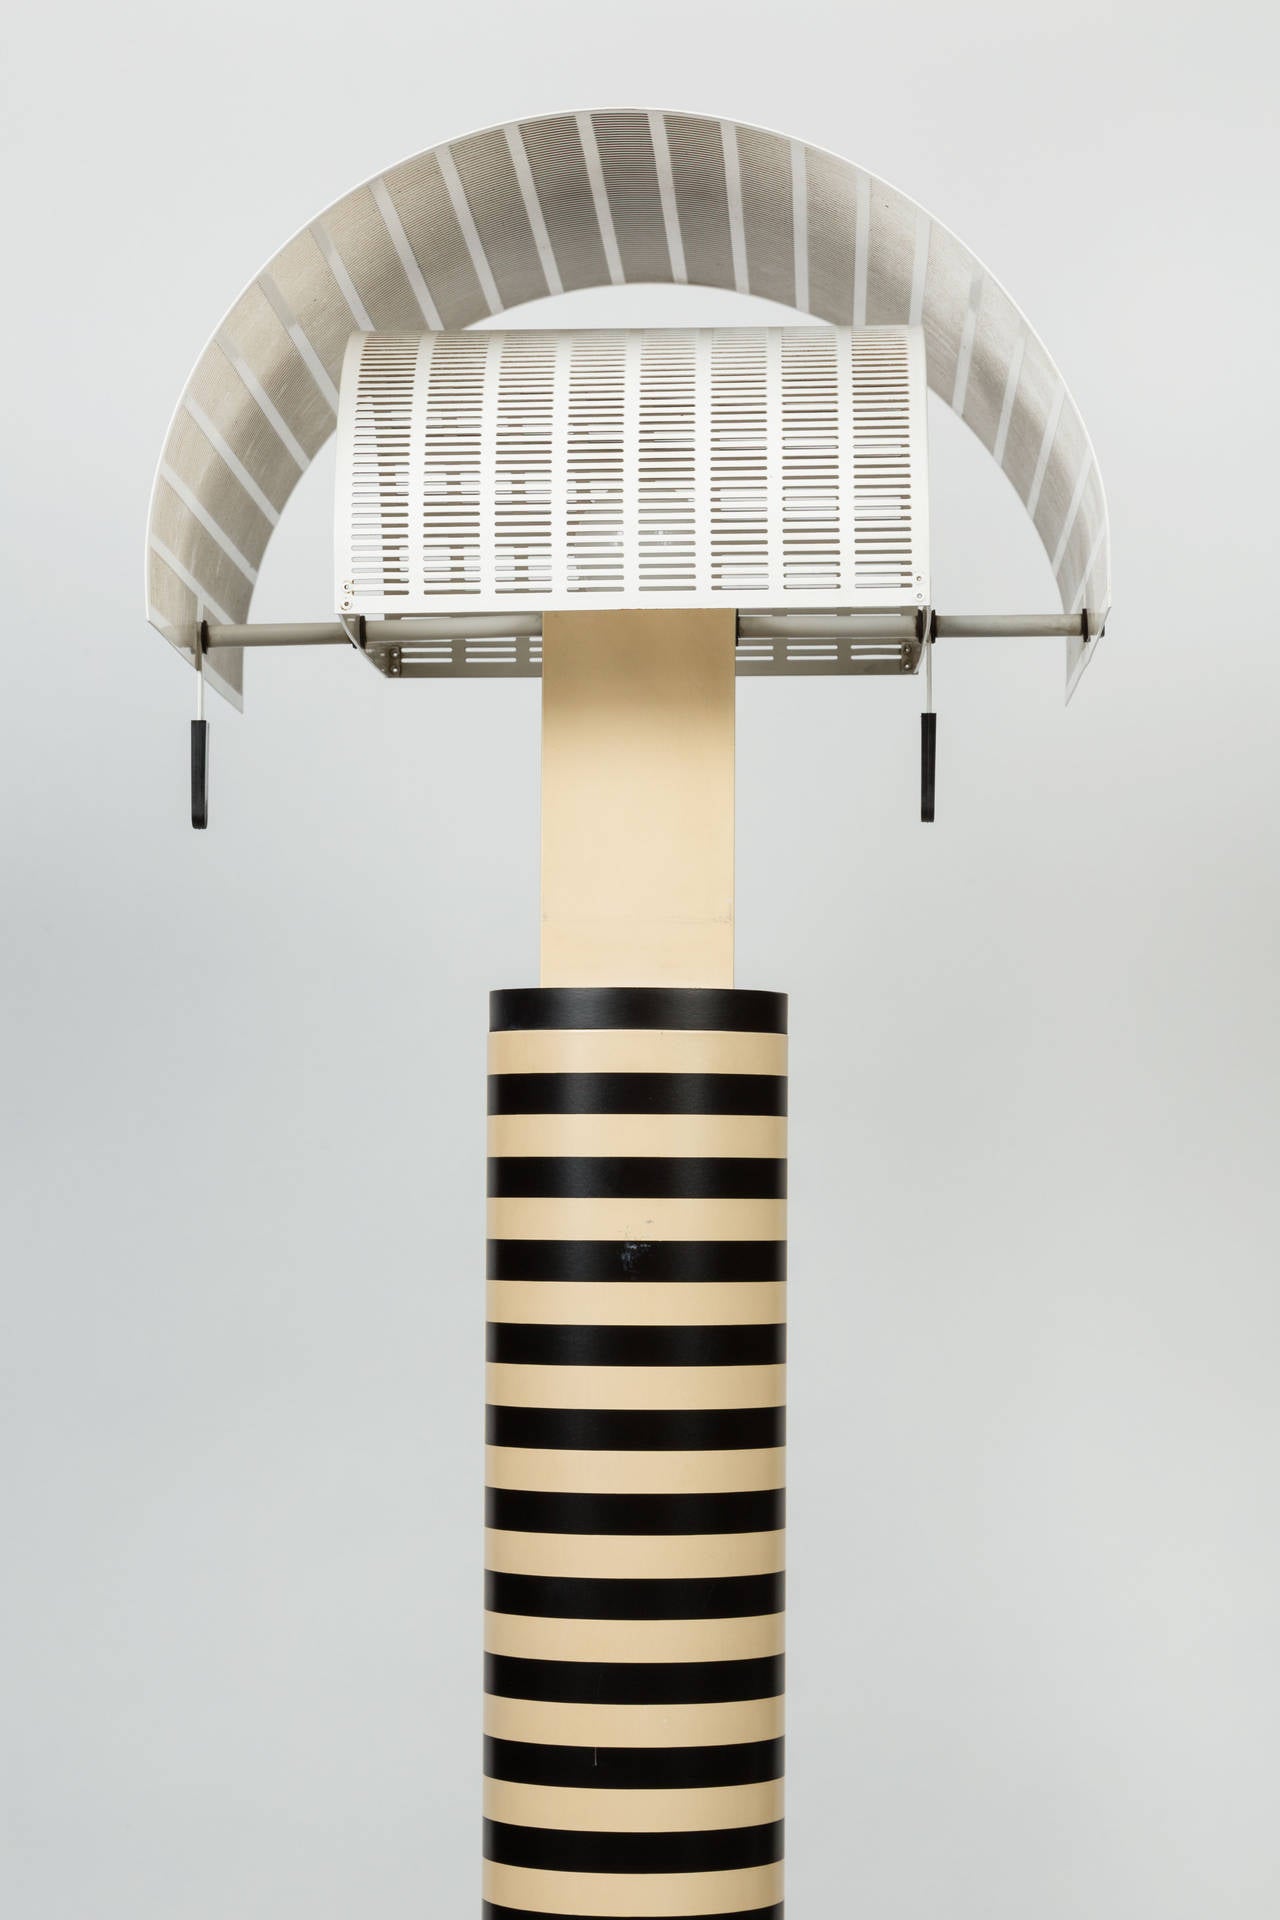 Late 20th Century Mario Botta Shogun Floor Lamp